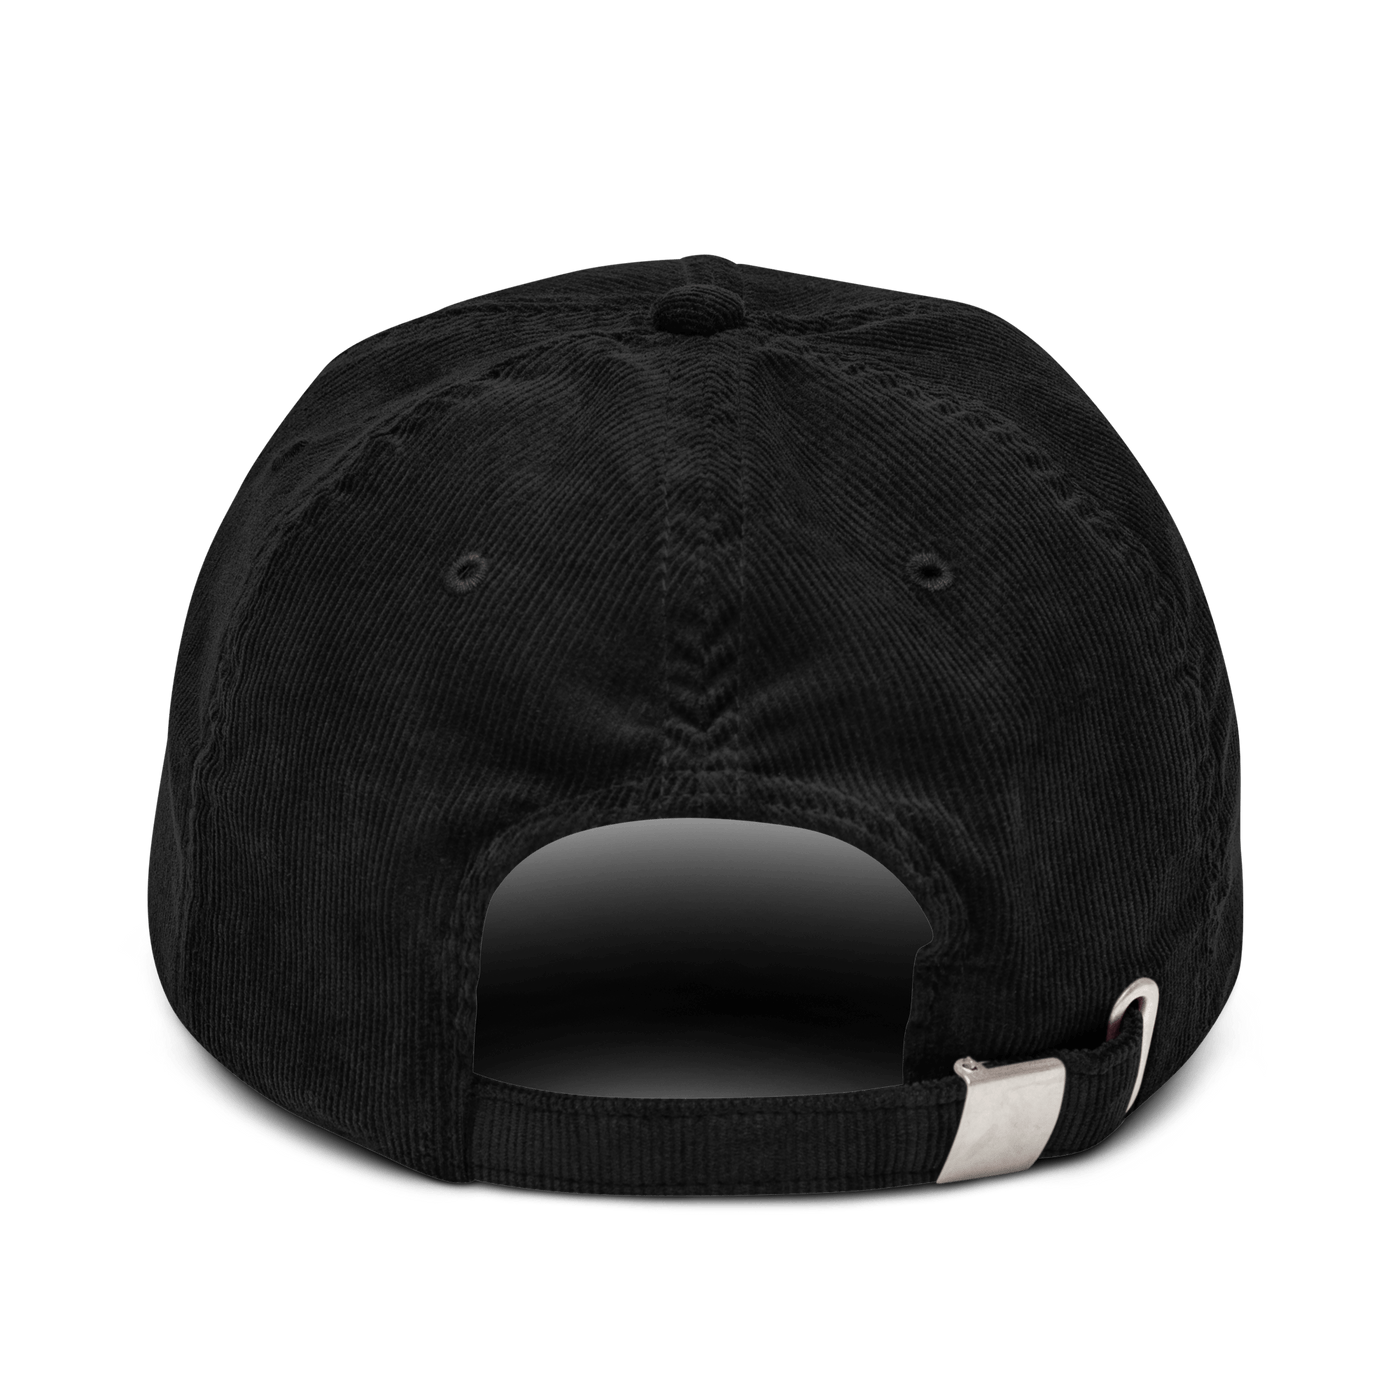 Aglio e Olio Corduroy hat - Black - - Just Another Cap Store